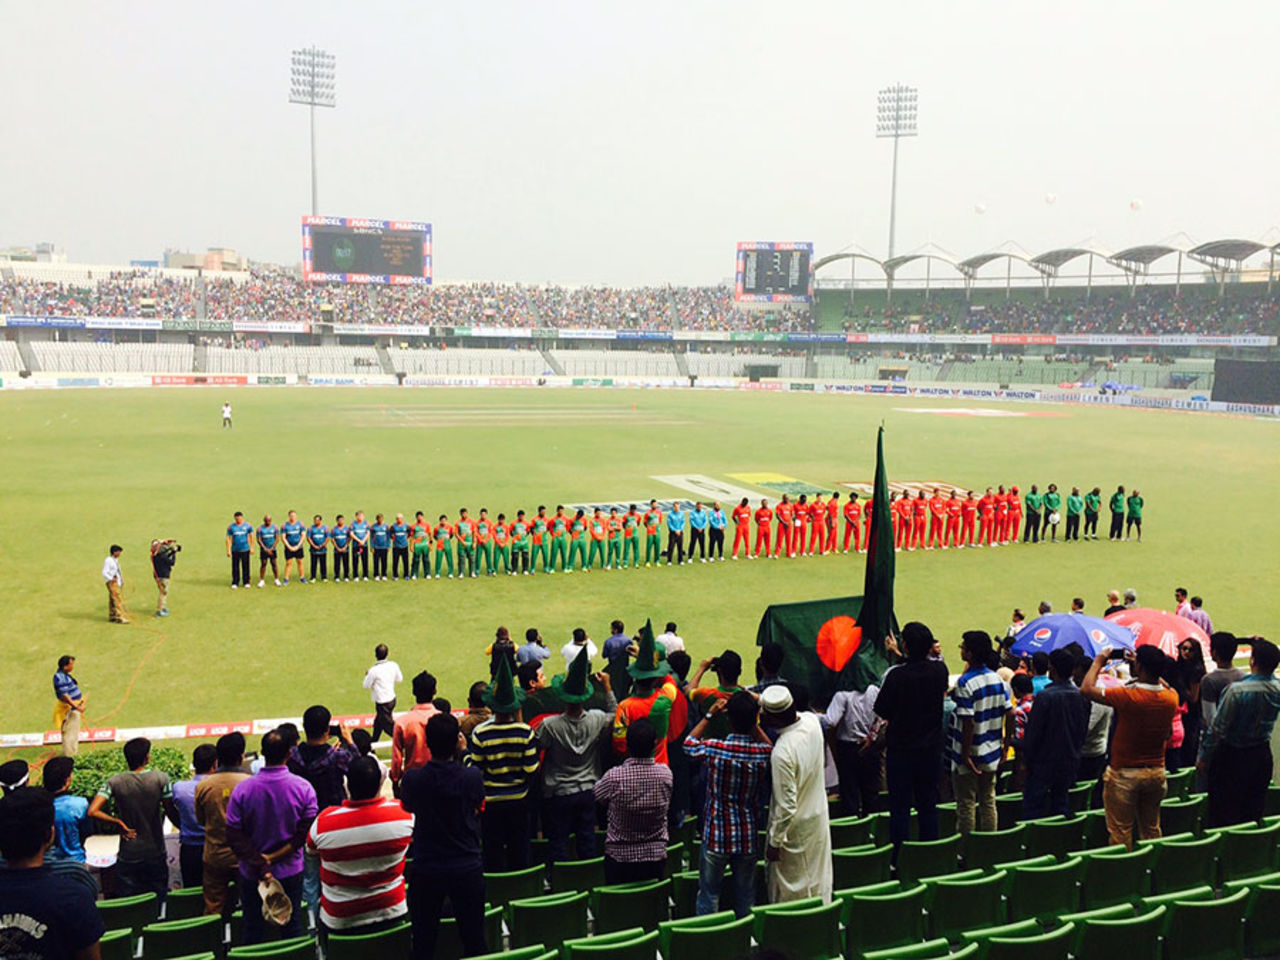 Players from both teams observe a minute's silence in memory of Phillip Hughes, Bangladesh v Zimbabwe, 4th ODI, Mirpur, November 28, 2014